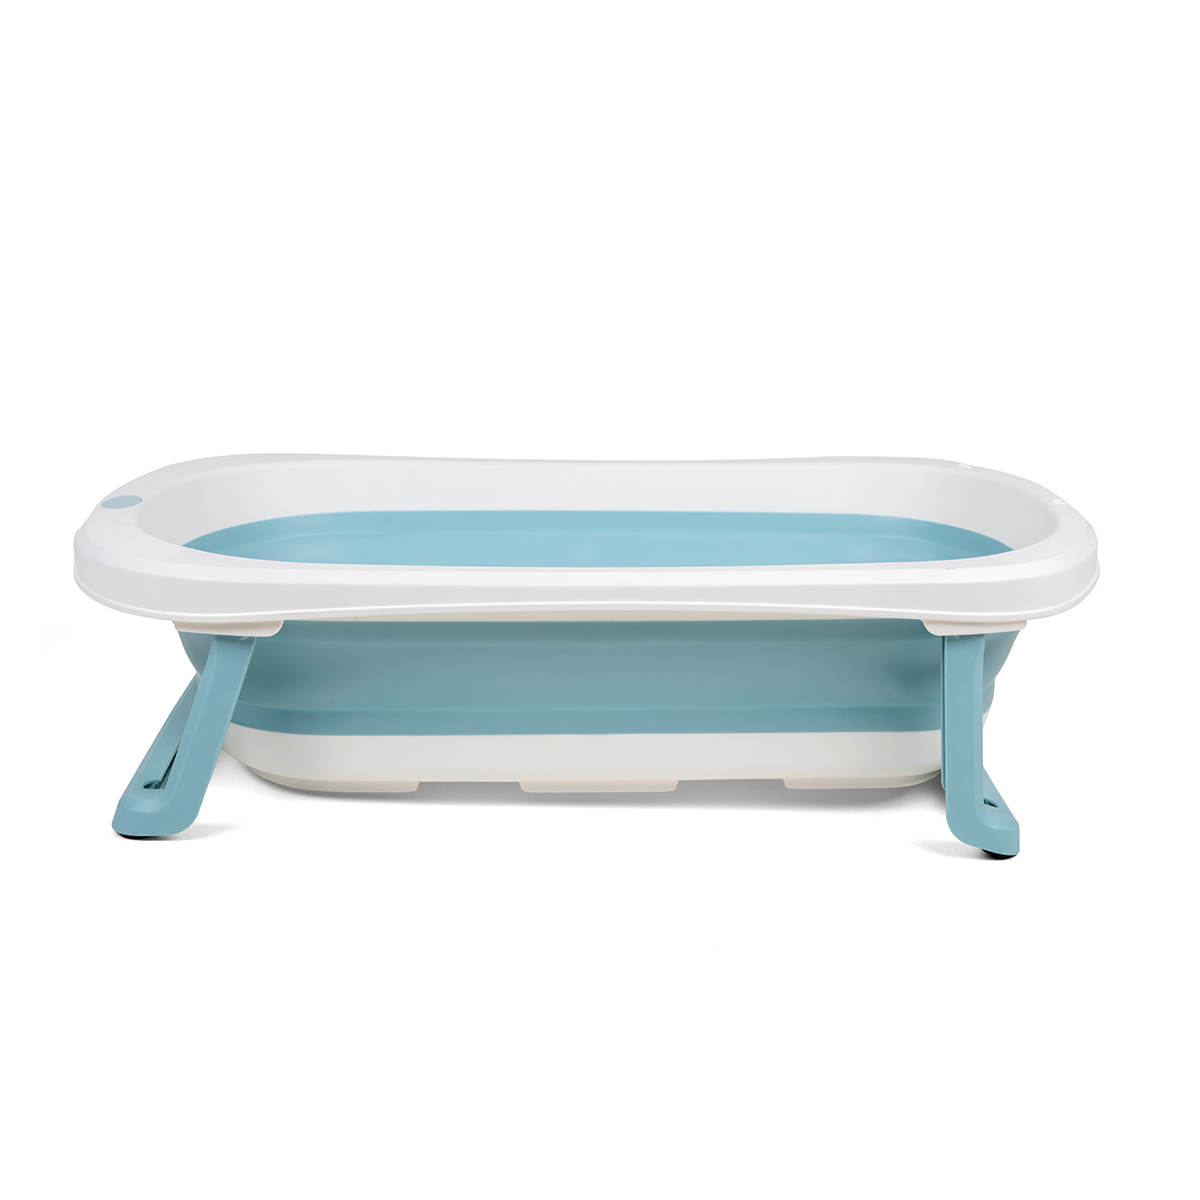 Hot sell baby foldable bath tub